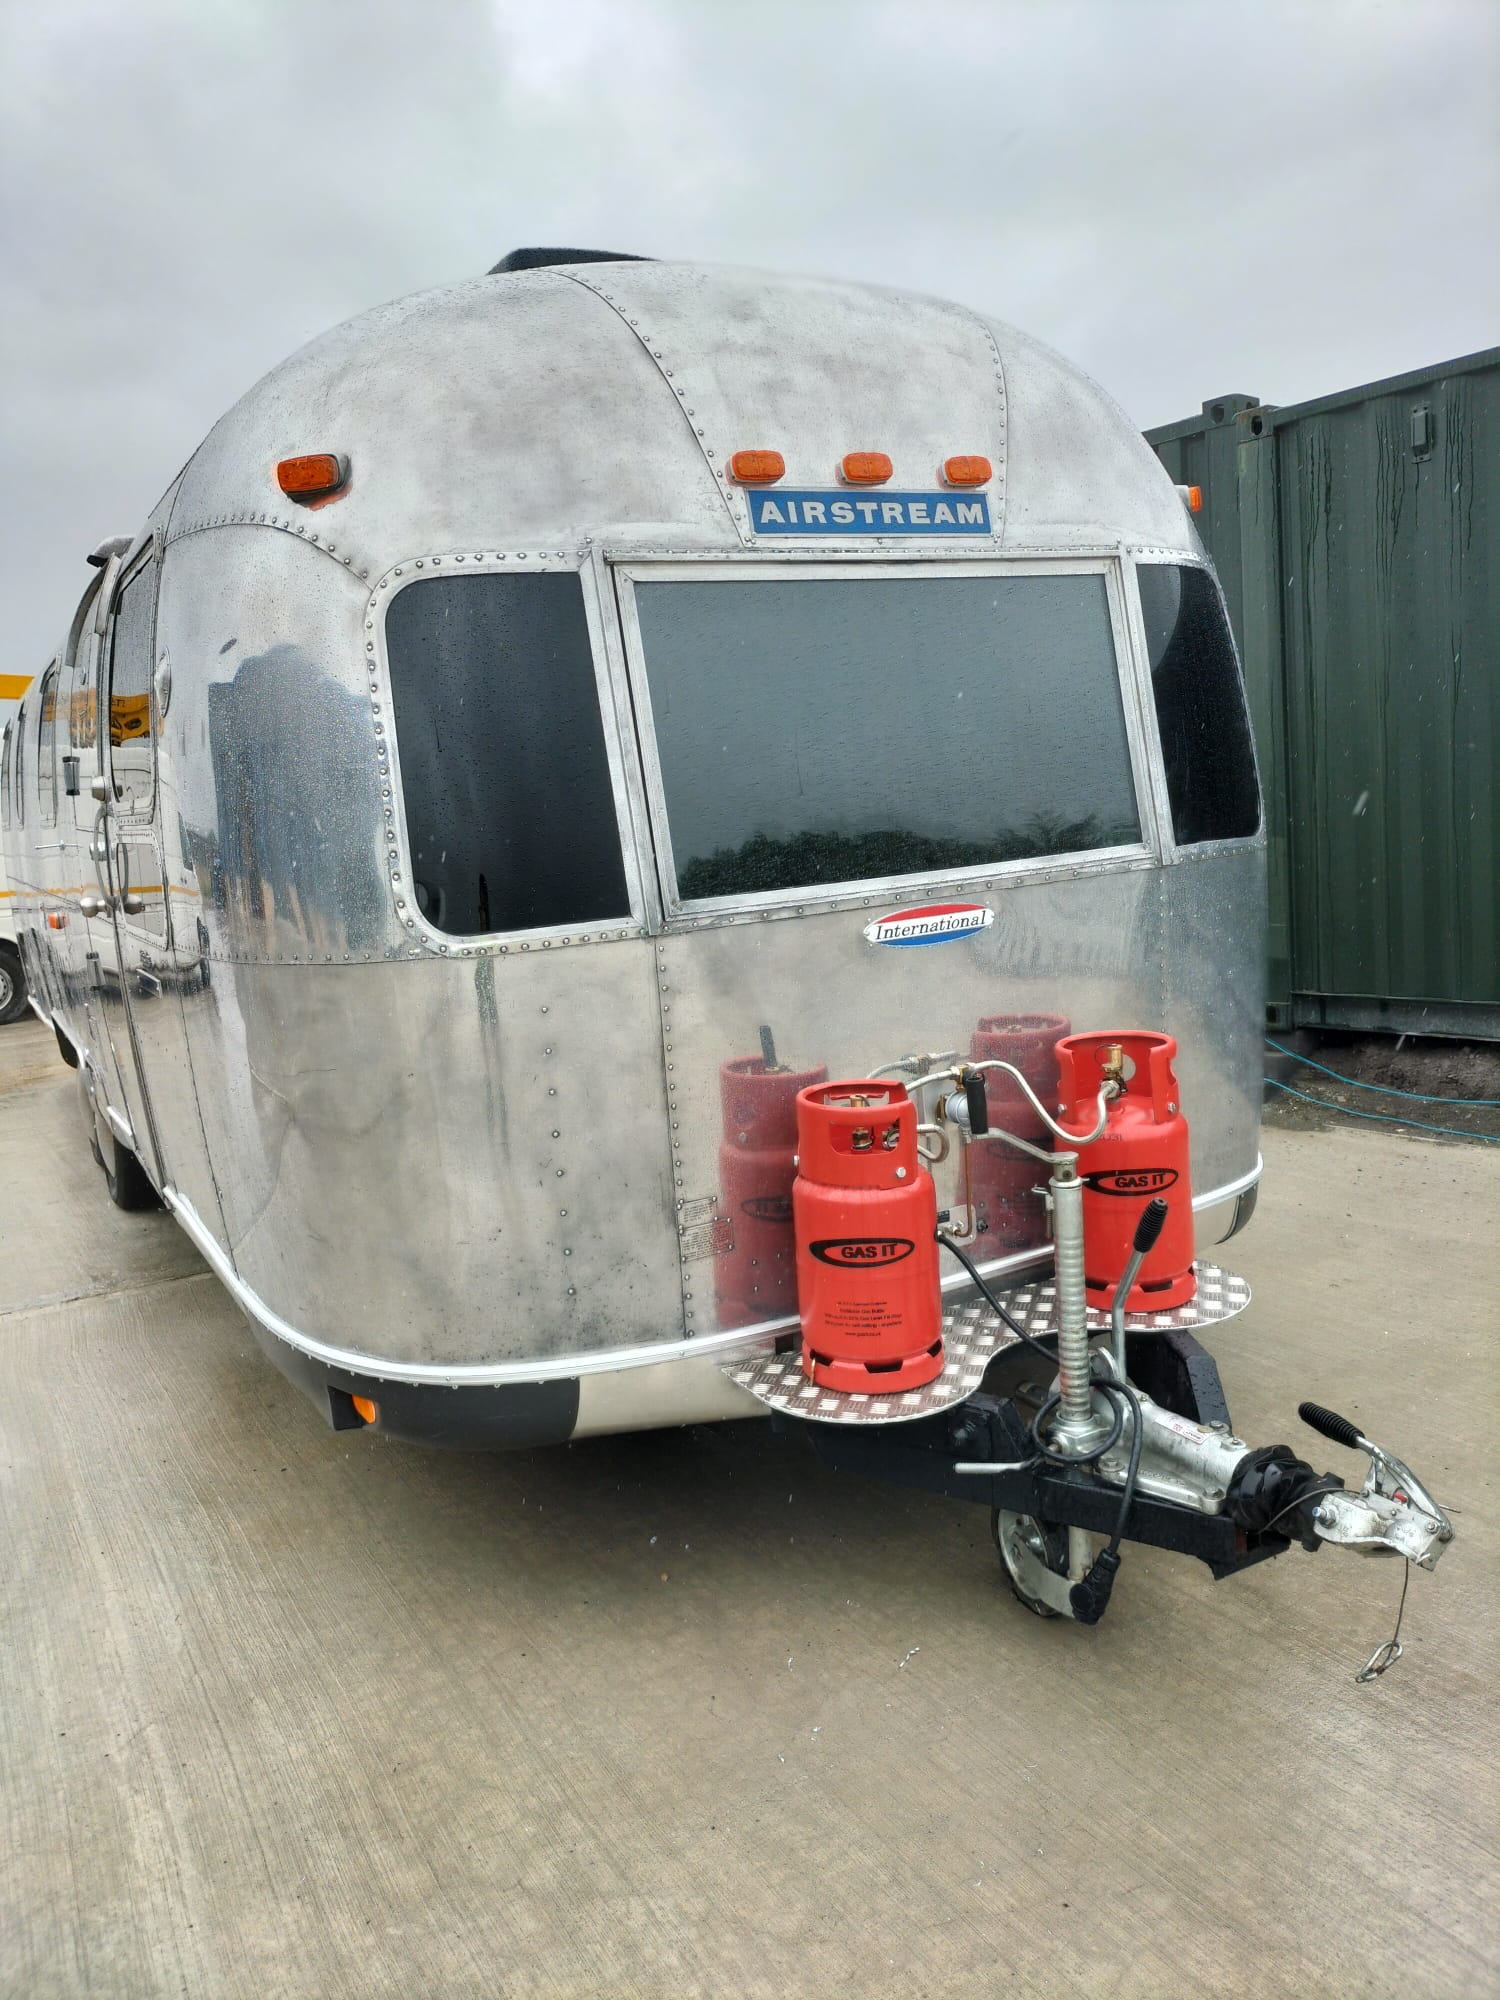 1974 Airstream Caravan Project